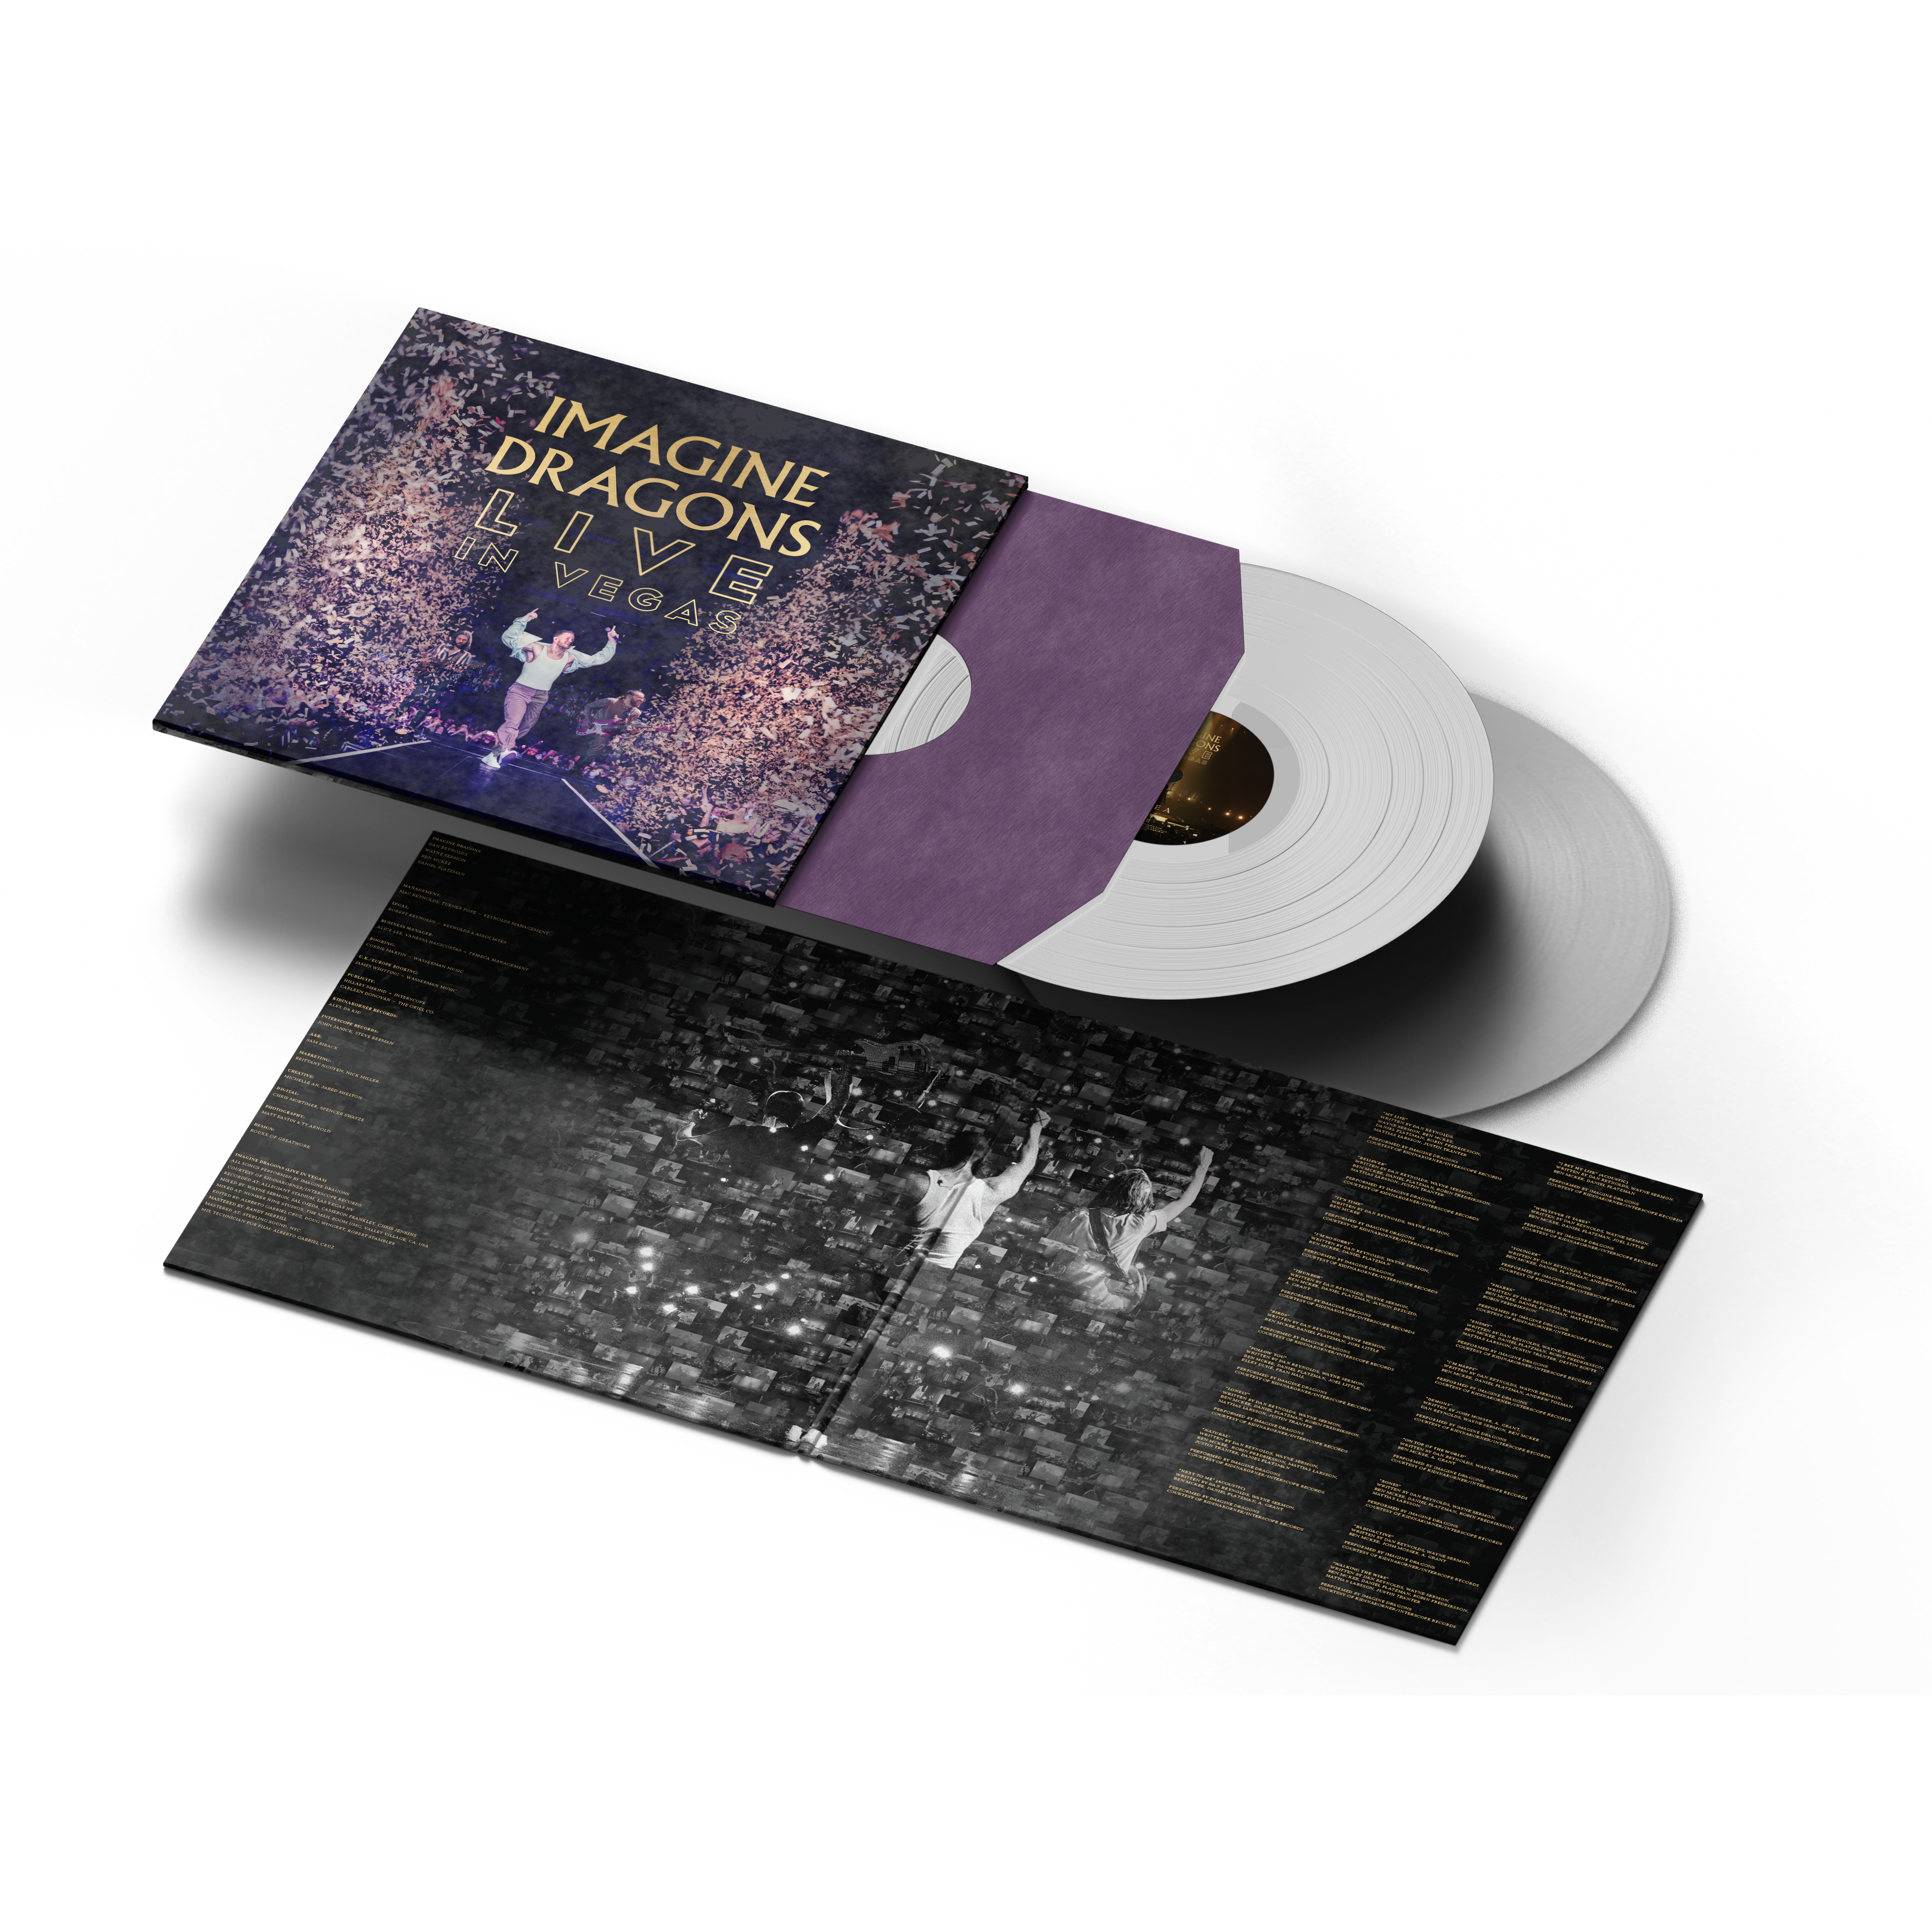 IMAGINE DRAGONS/LTD. EDITION CD GOLD DISC/RECORD/EVOLVE